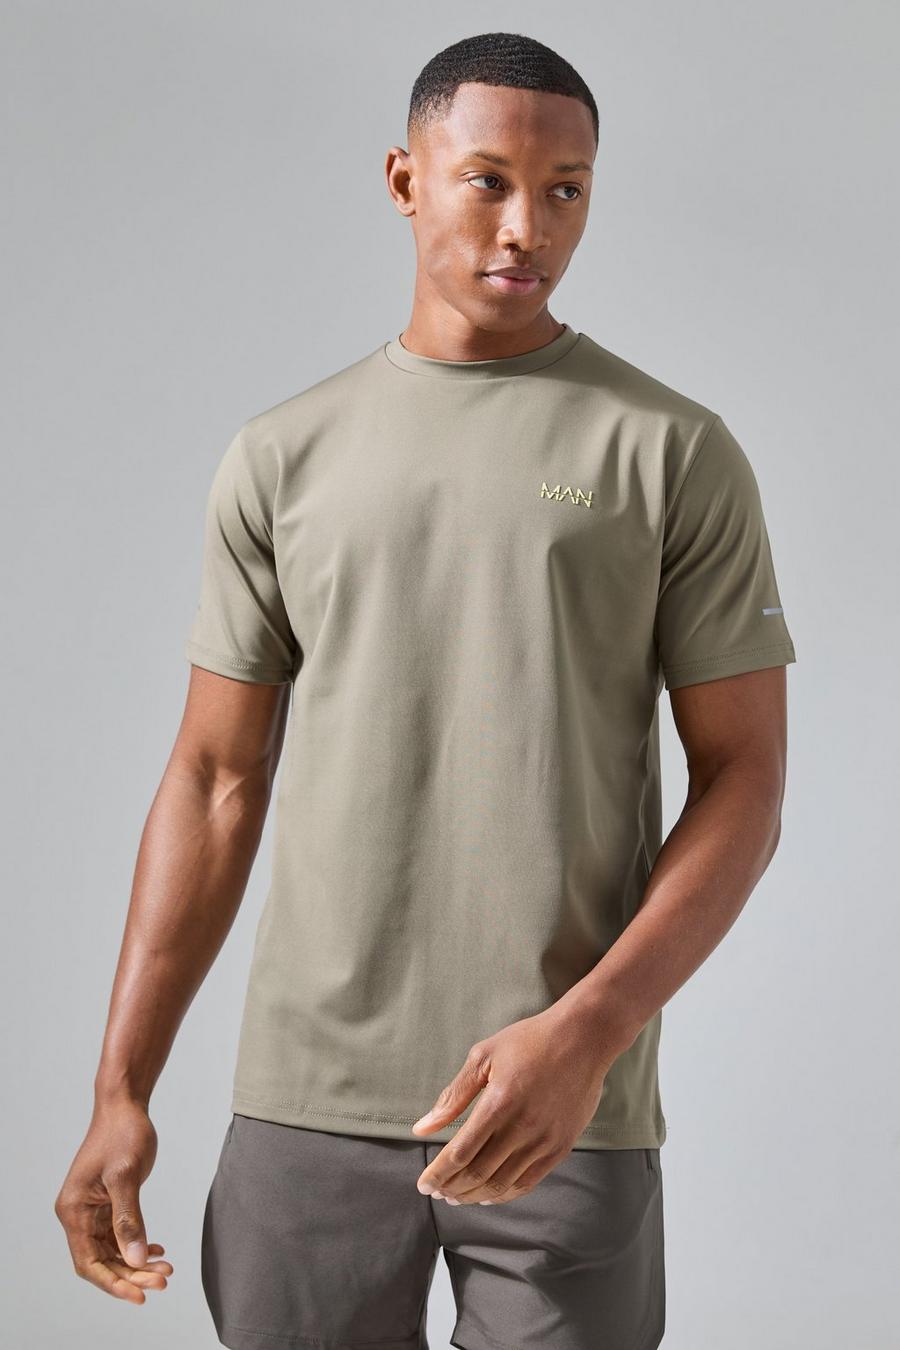 Man Active Performance T-Shirt, Khaki